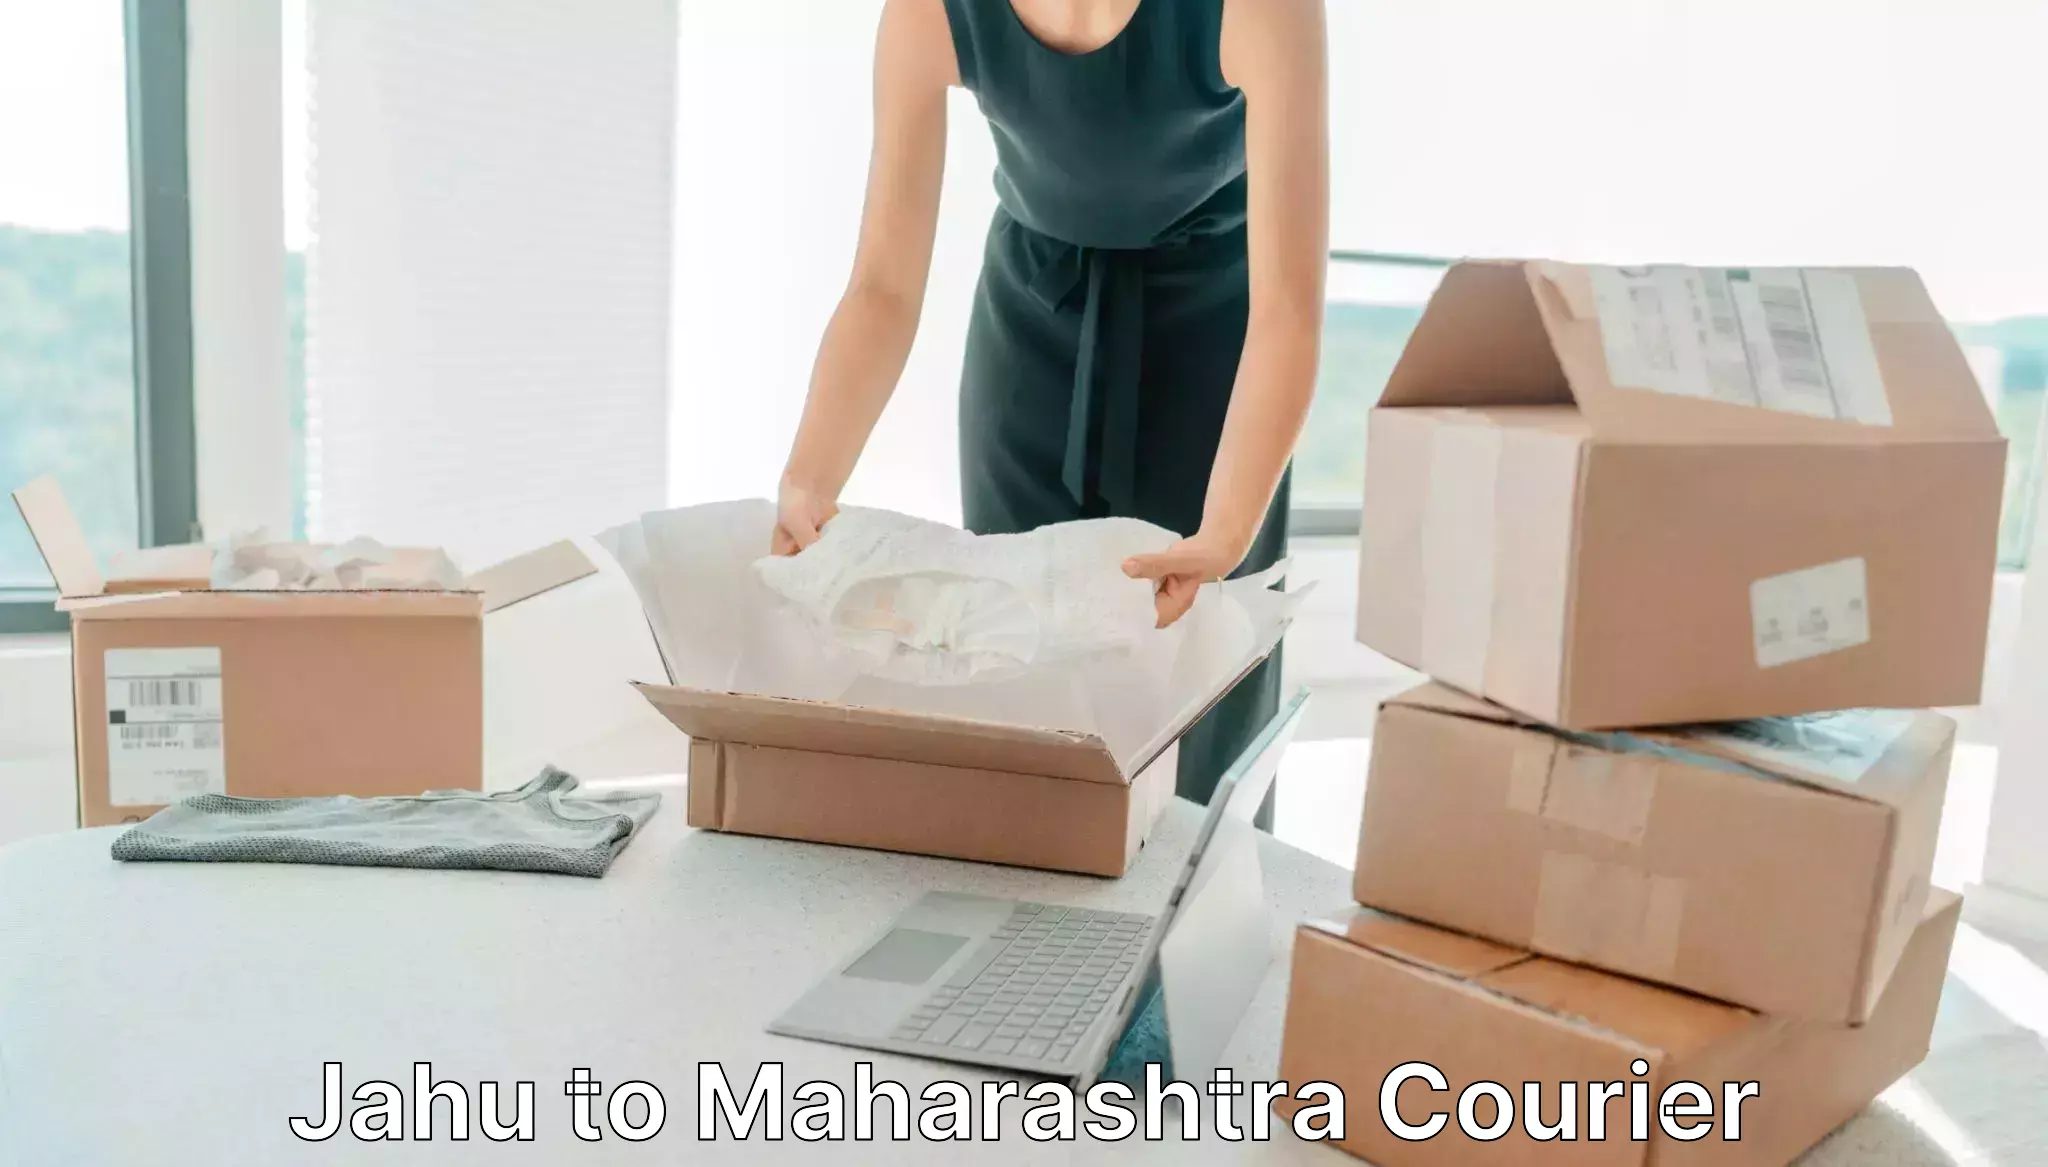 High-priority parcel service Jahu to Maharashtra